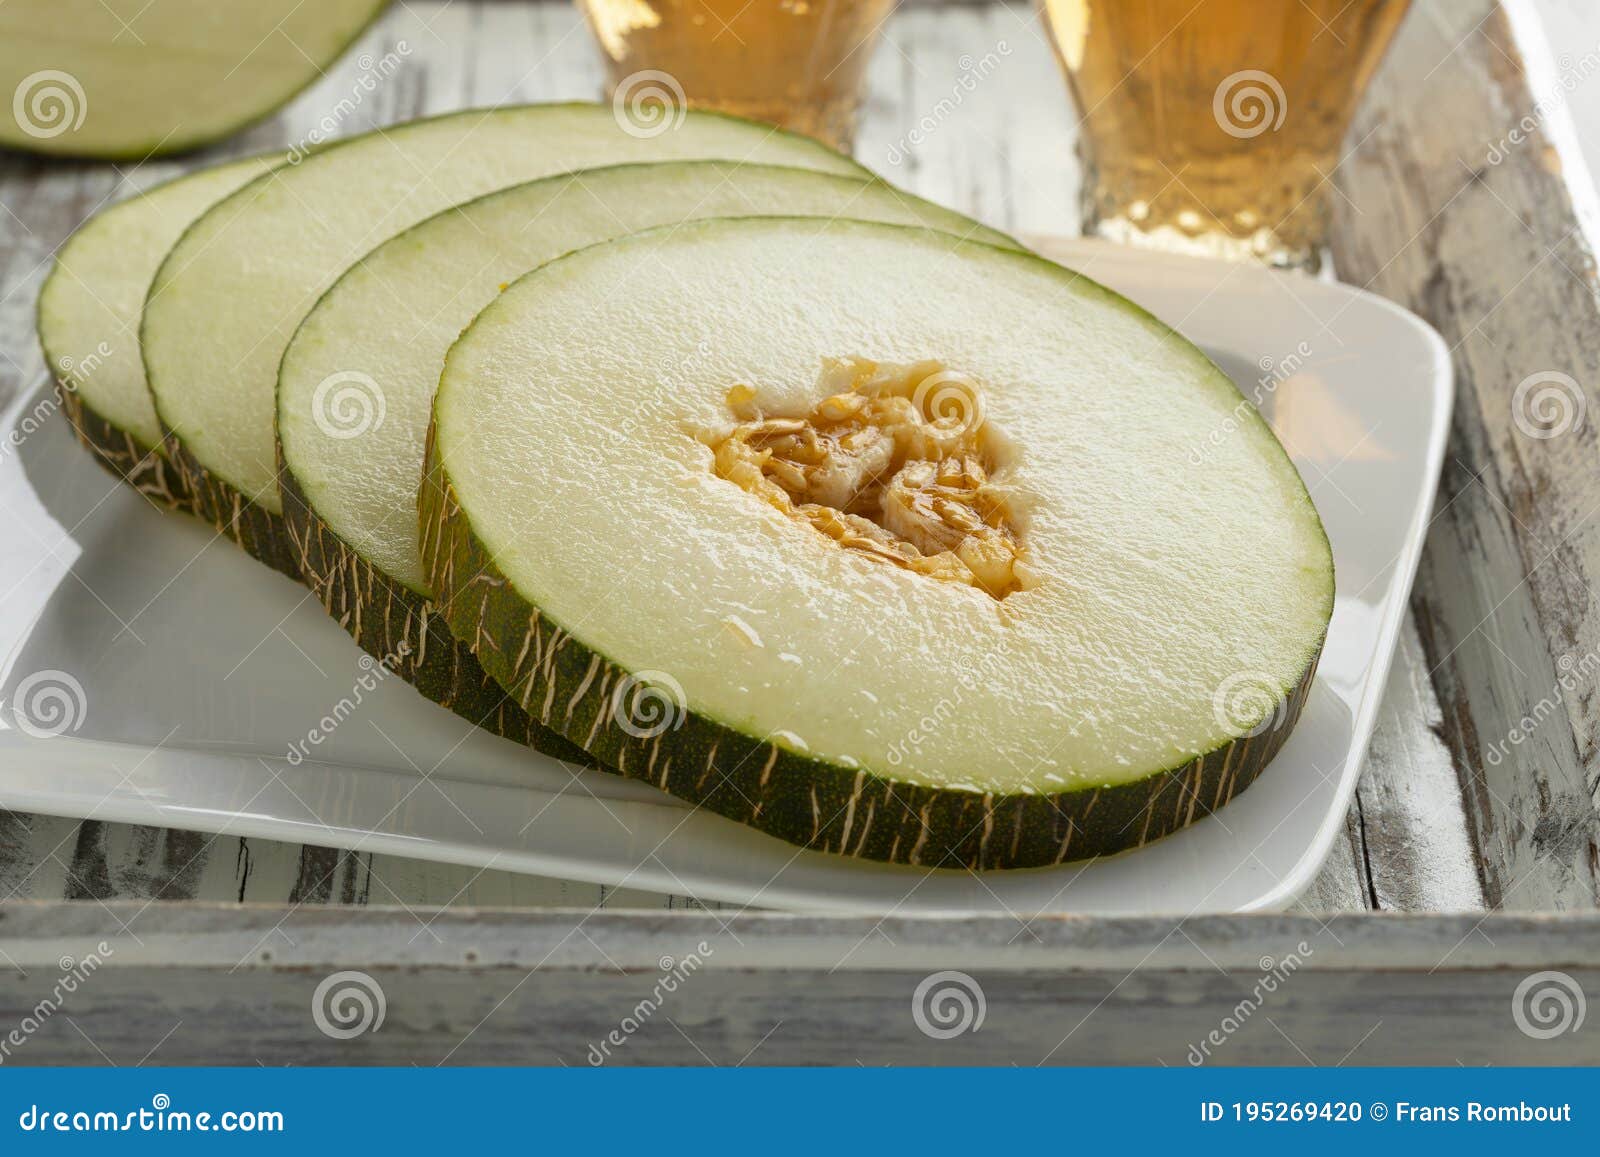 sliced piel de sapo melon